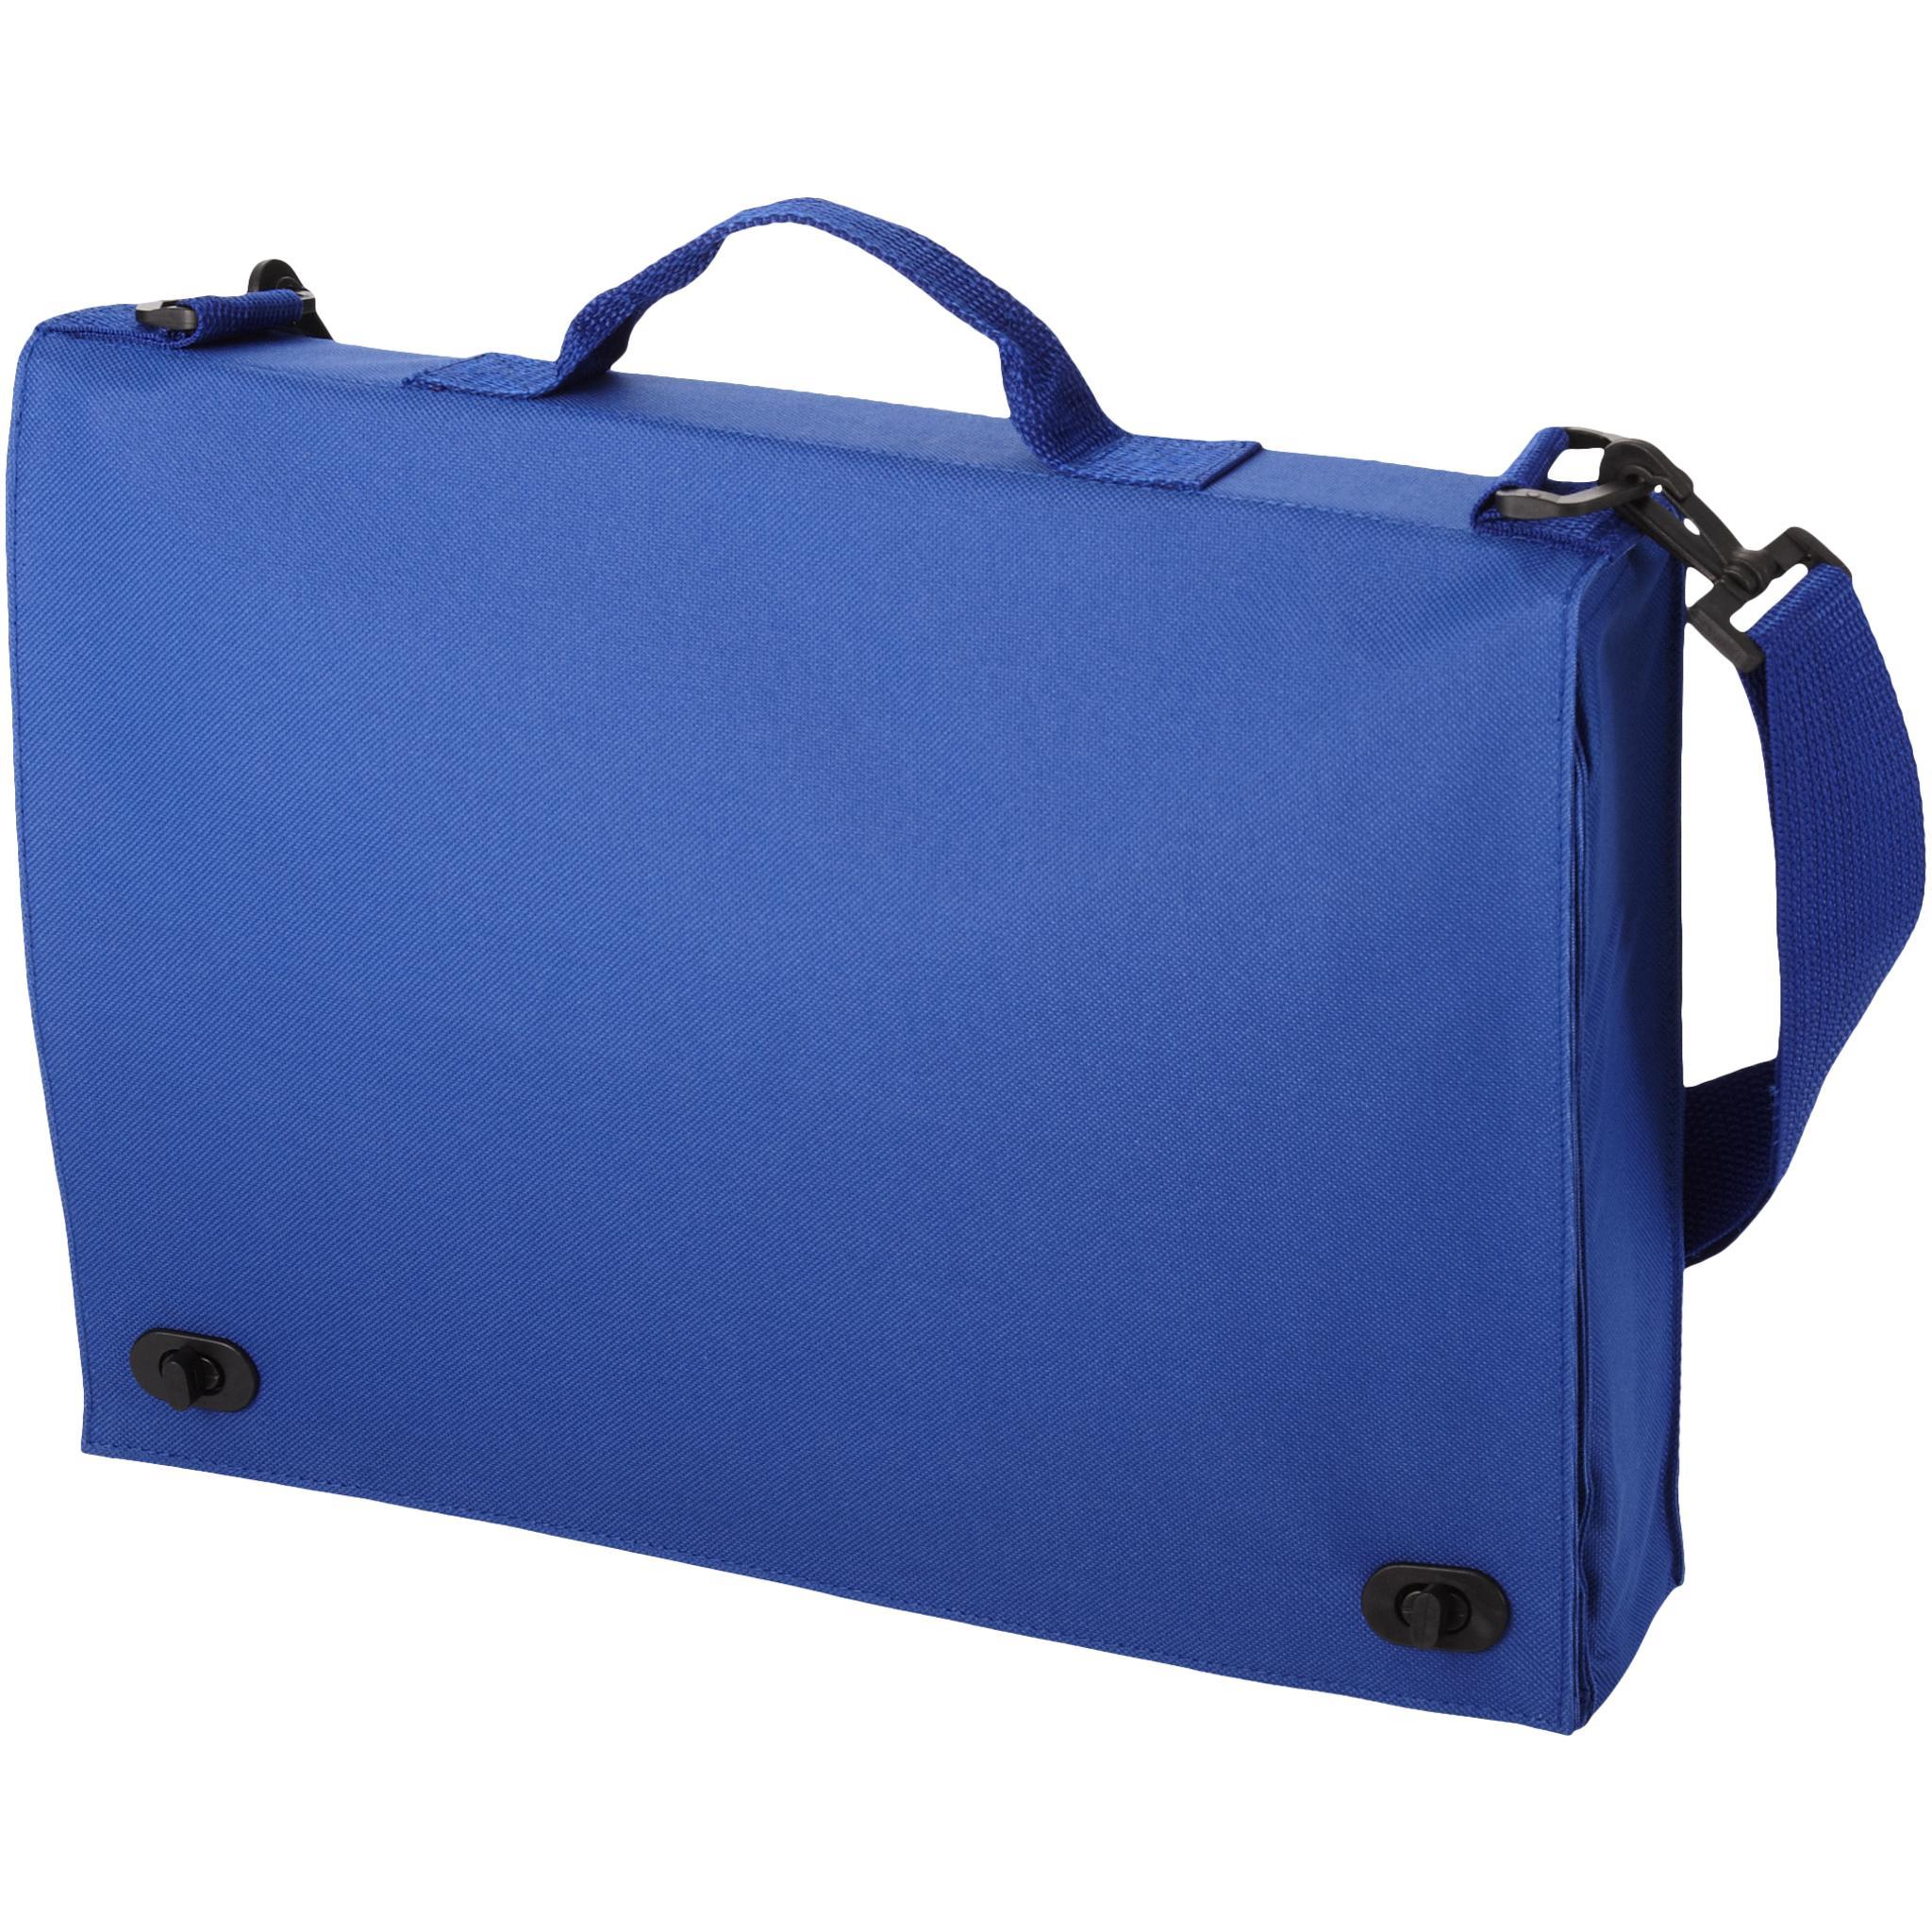 Bullet Santa Fee Conference Bag (Classic Royal Blue) (38 x 7 x 28cm)